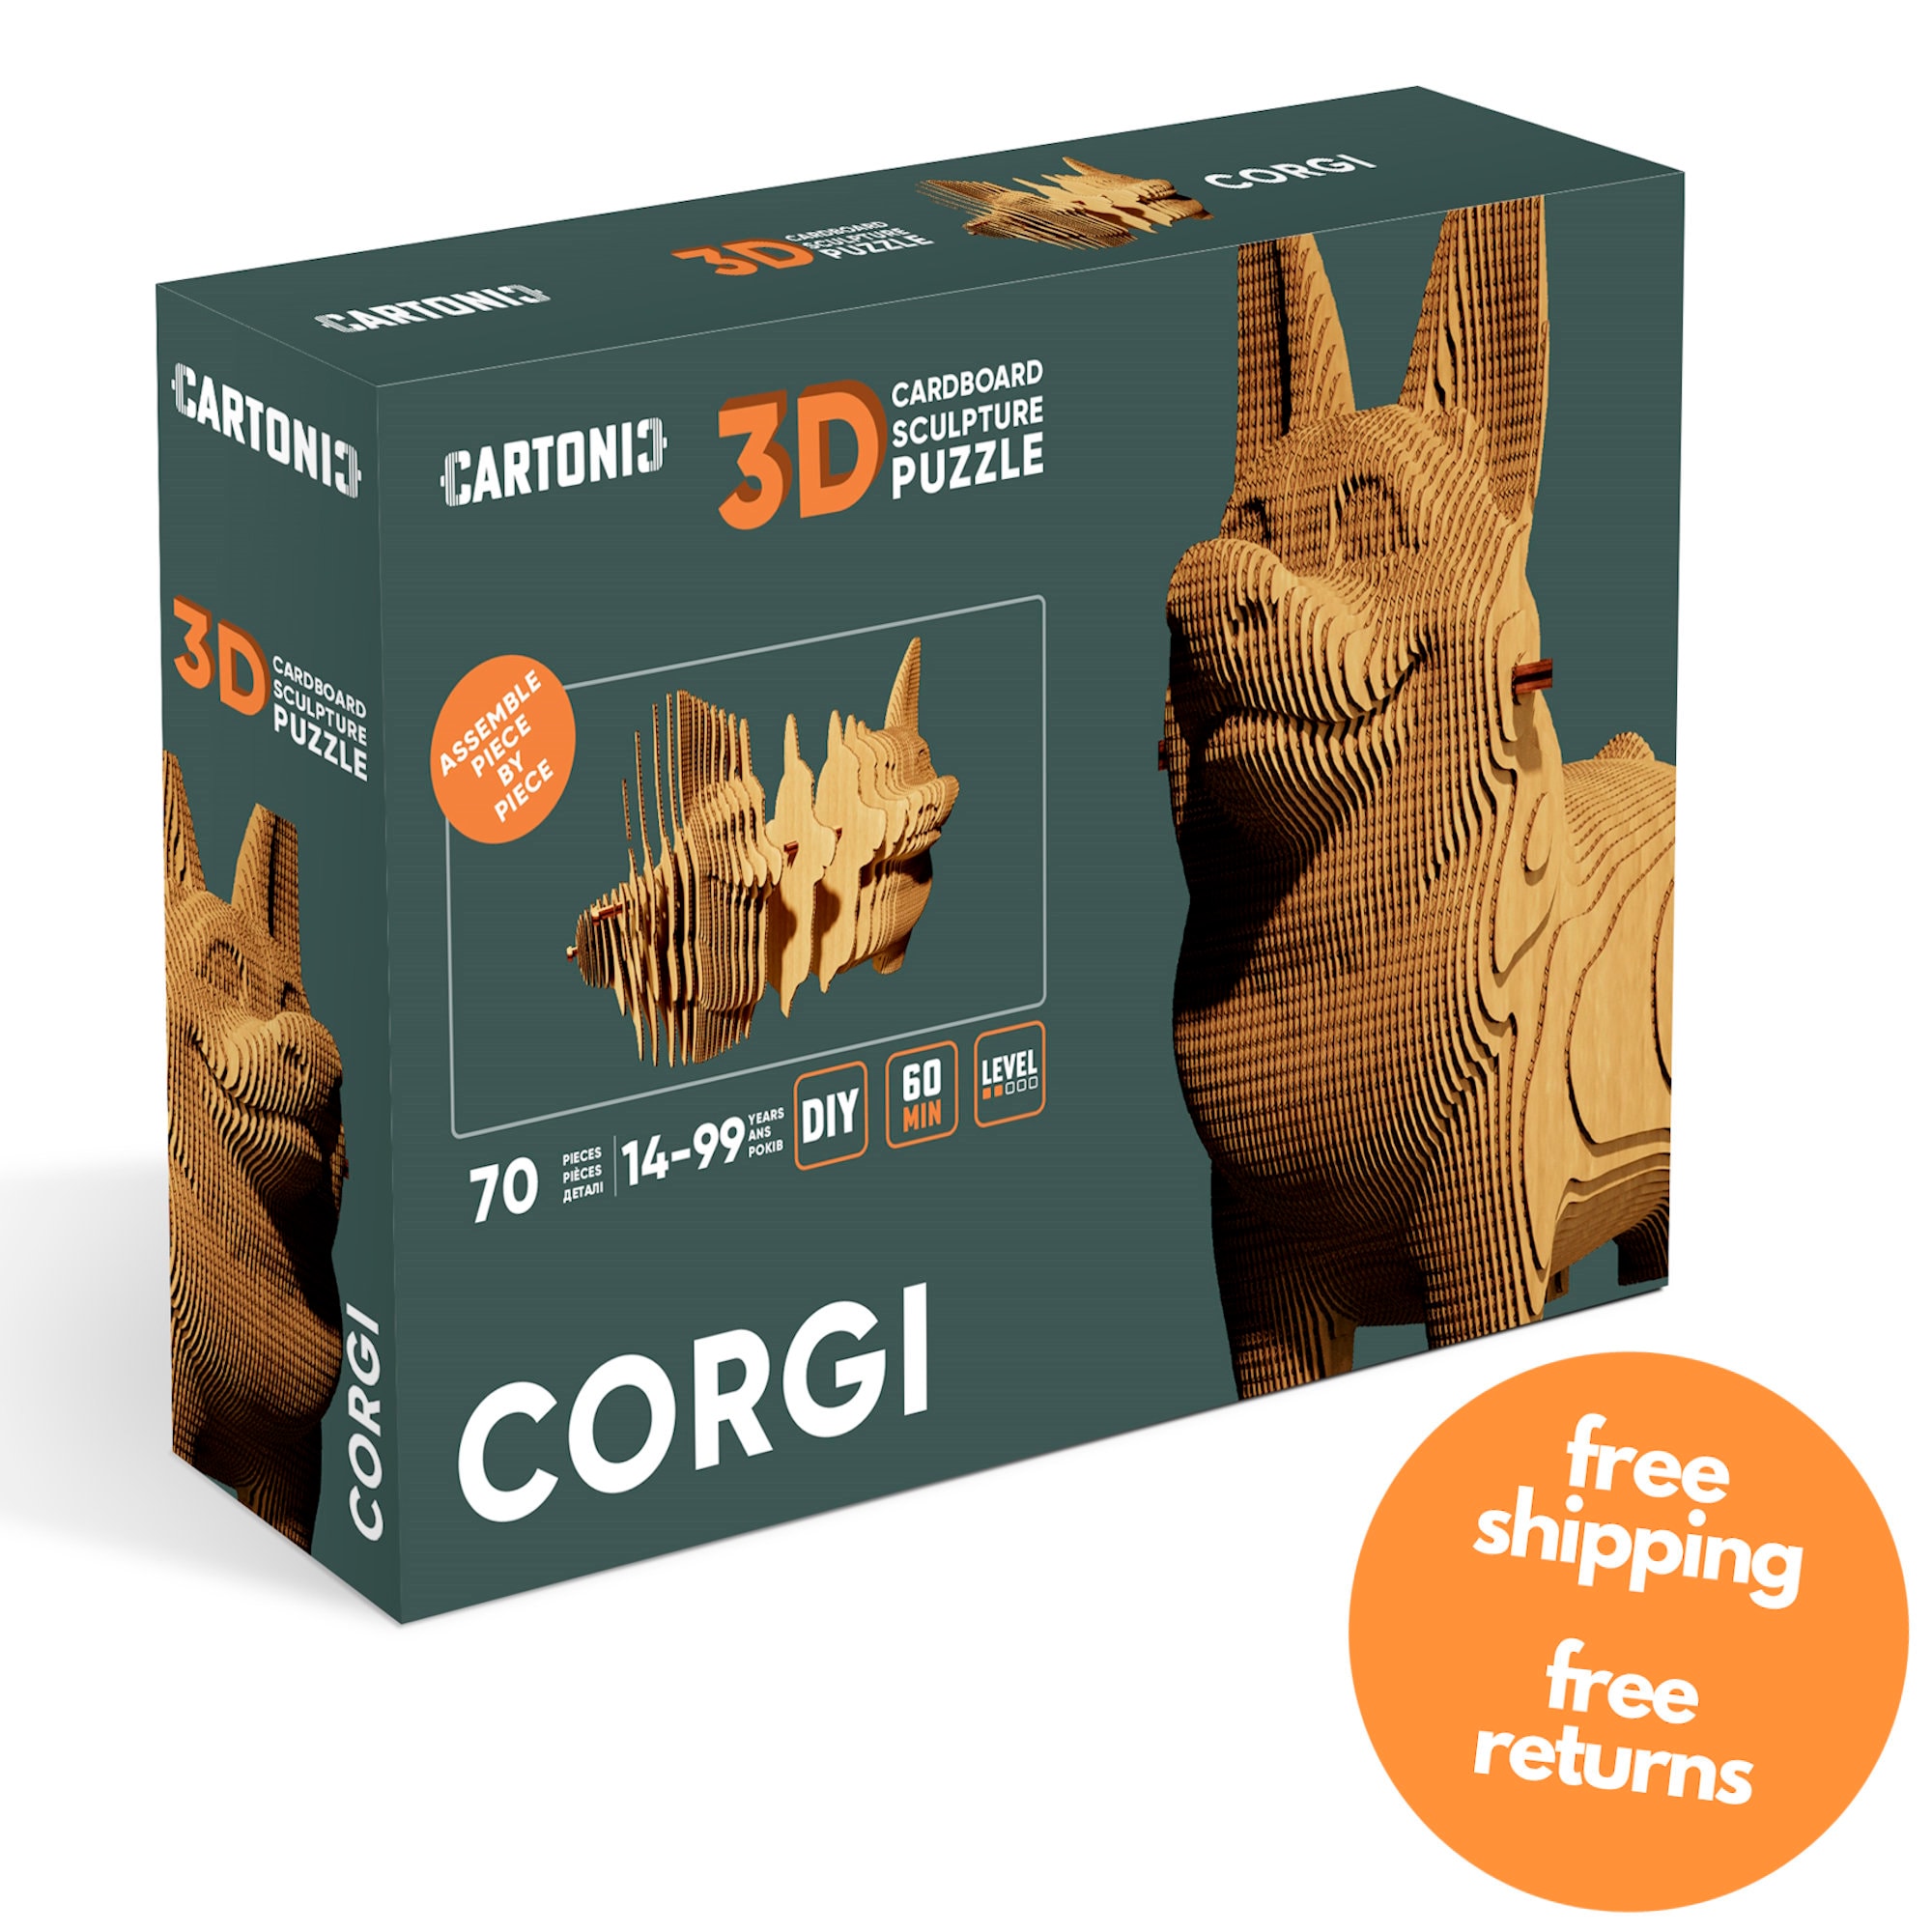 Cardboard puzzle Cartonic 3D Puzzle CORGI